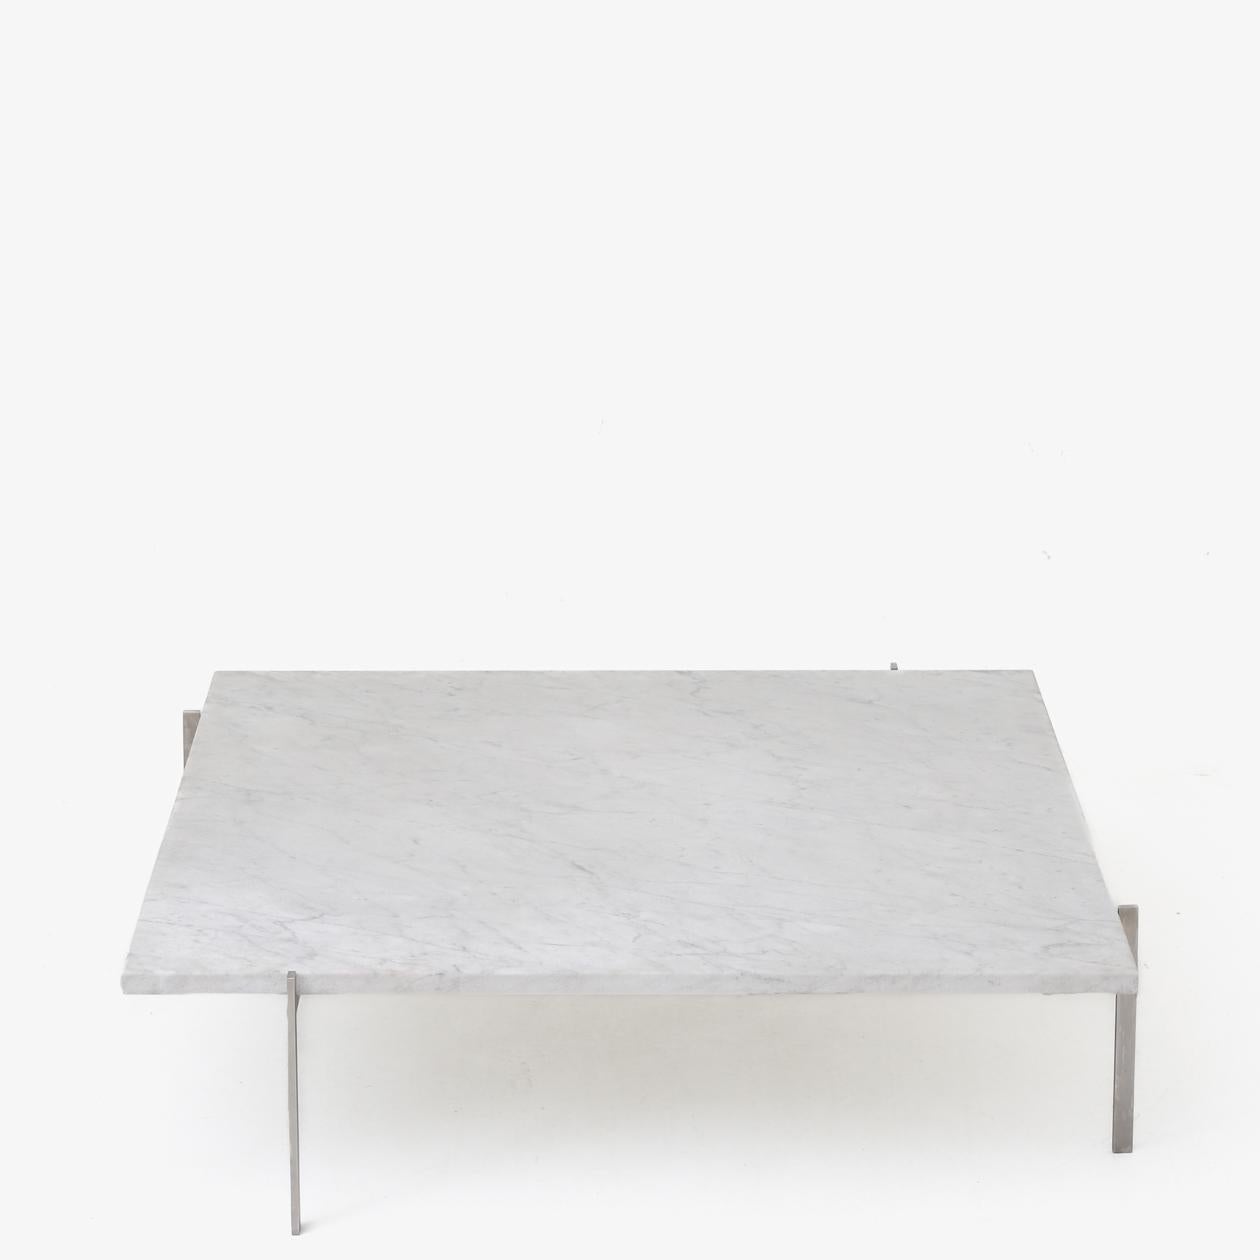 PK 61A - Large coffee table with light flint marble on steel frame. Fritz Hansen / Poul Kjærholm.